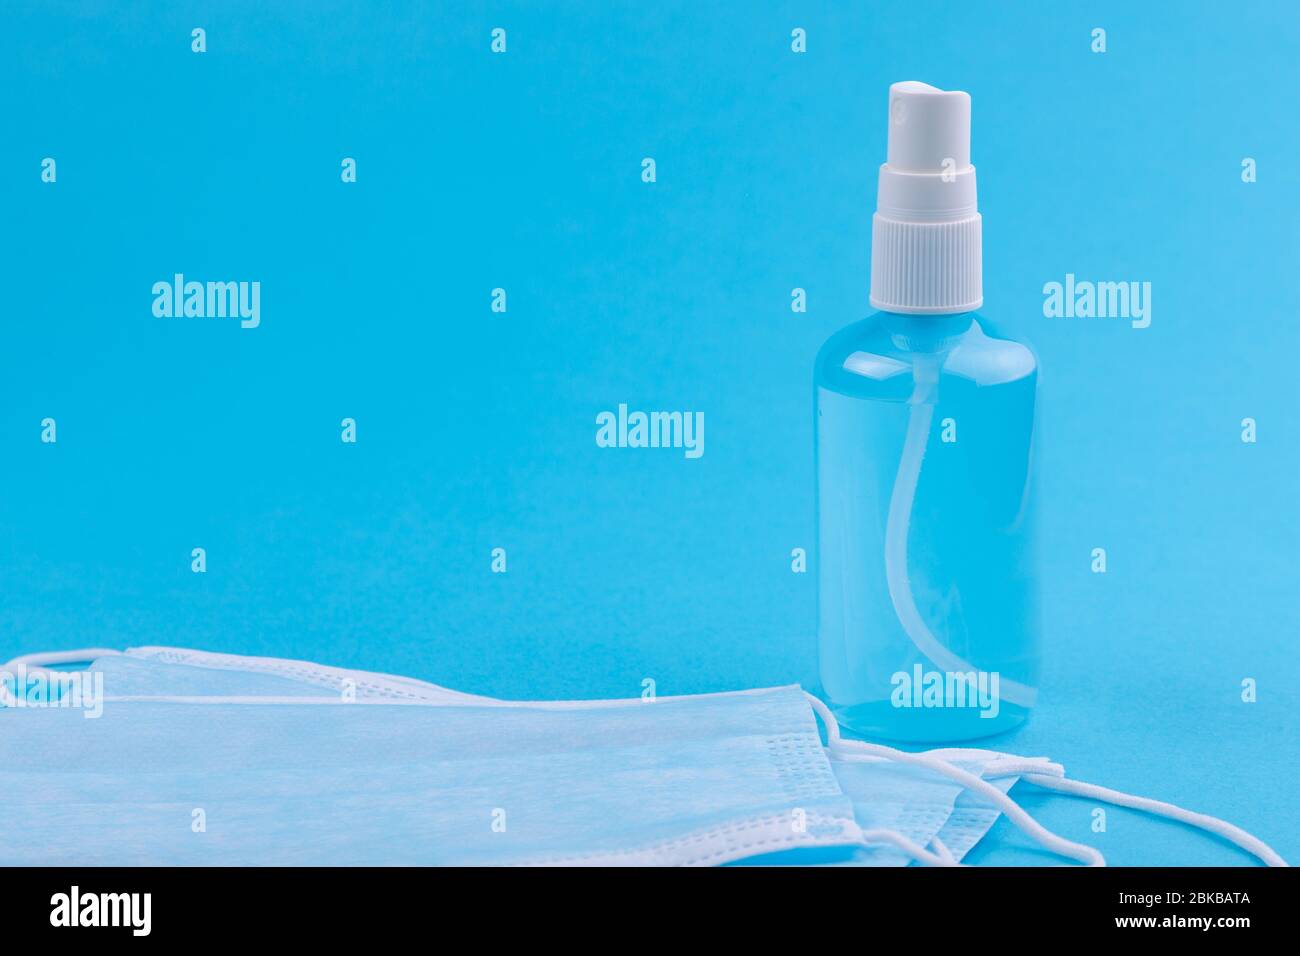 Medical mask and antiseptic spray isolated on blue Stock Photo